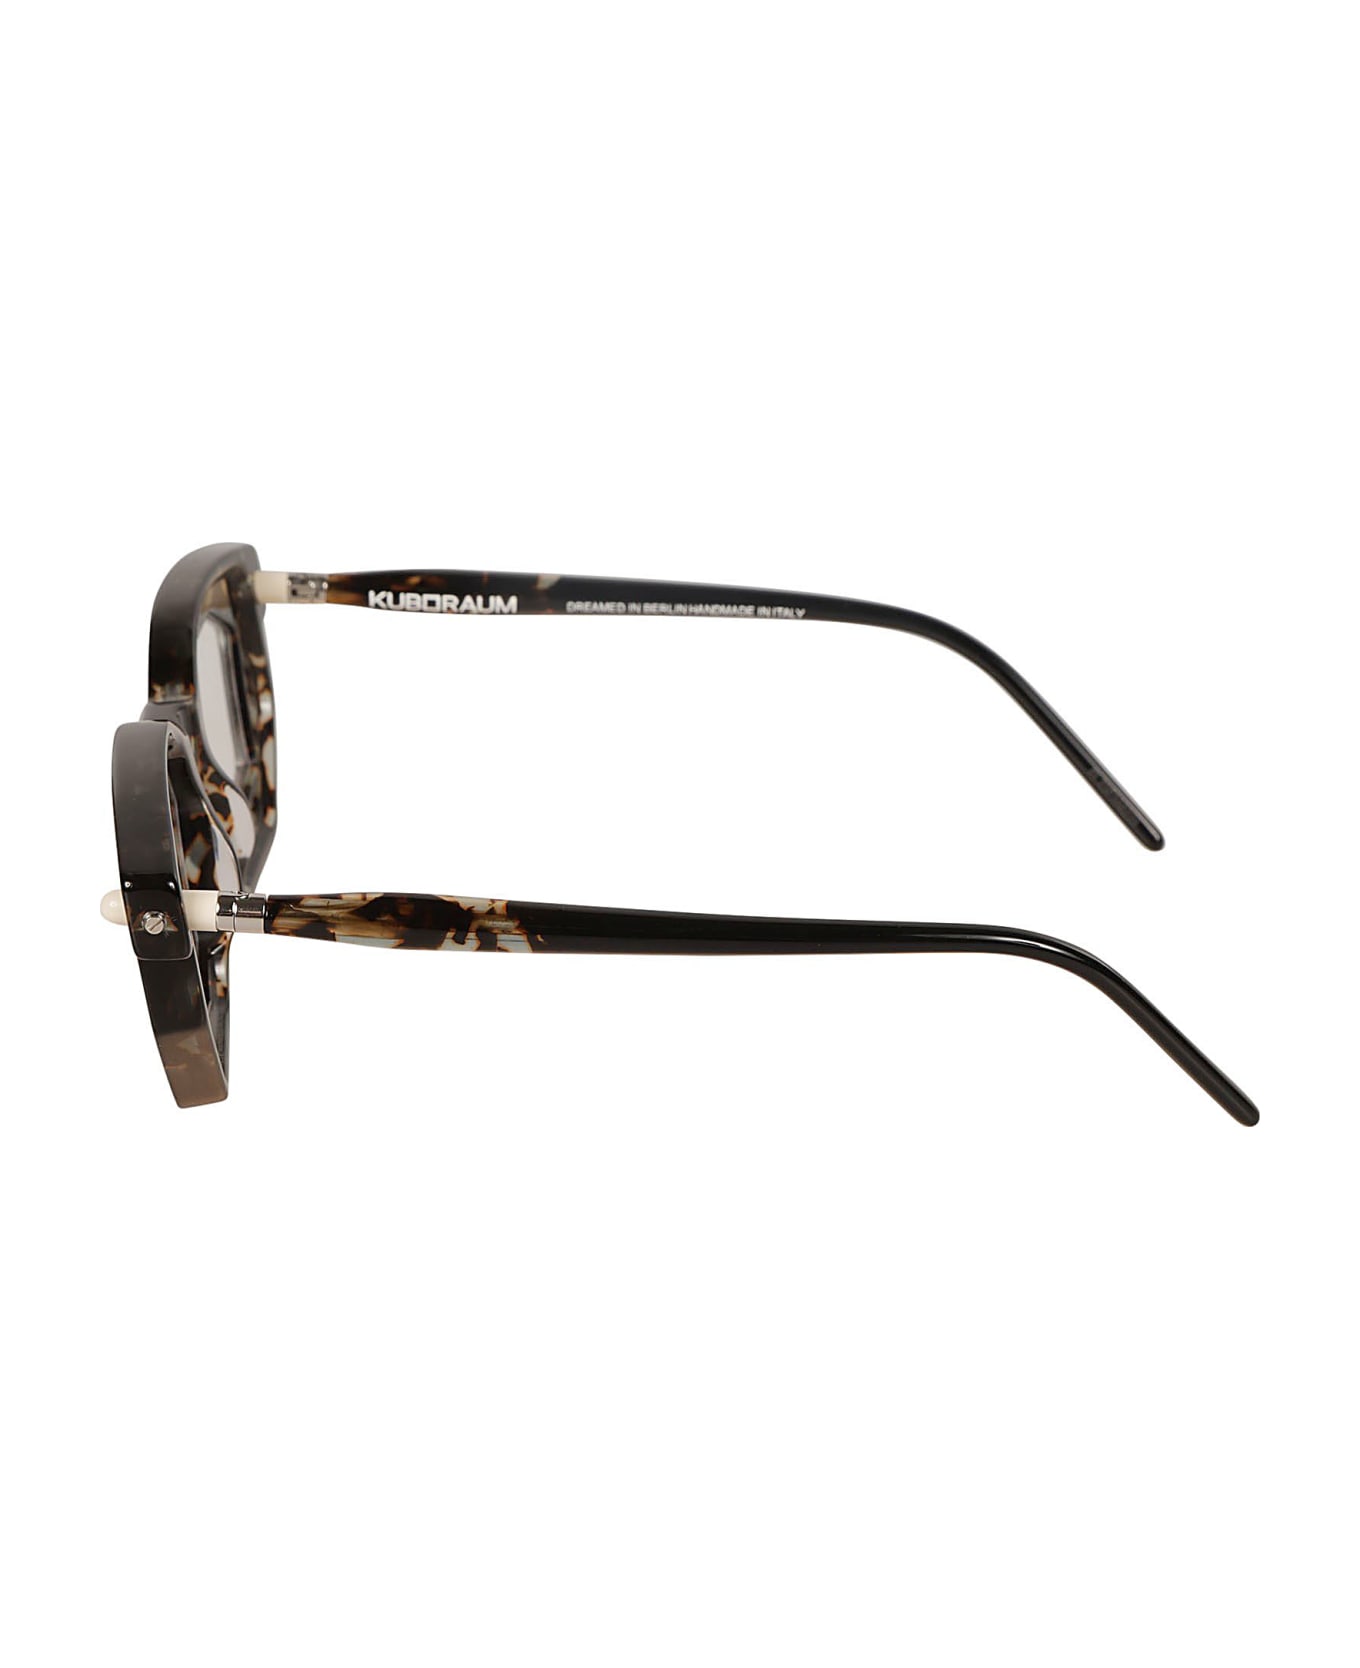 Kuboraum P14 Glasses Glasses - havana